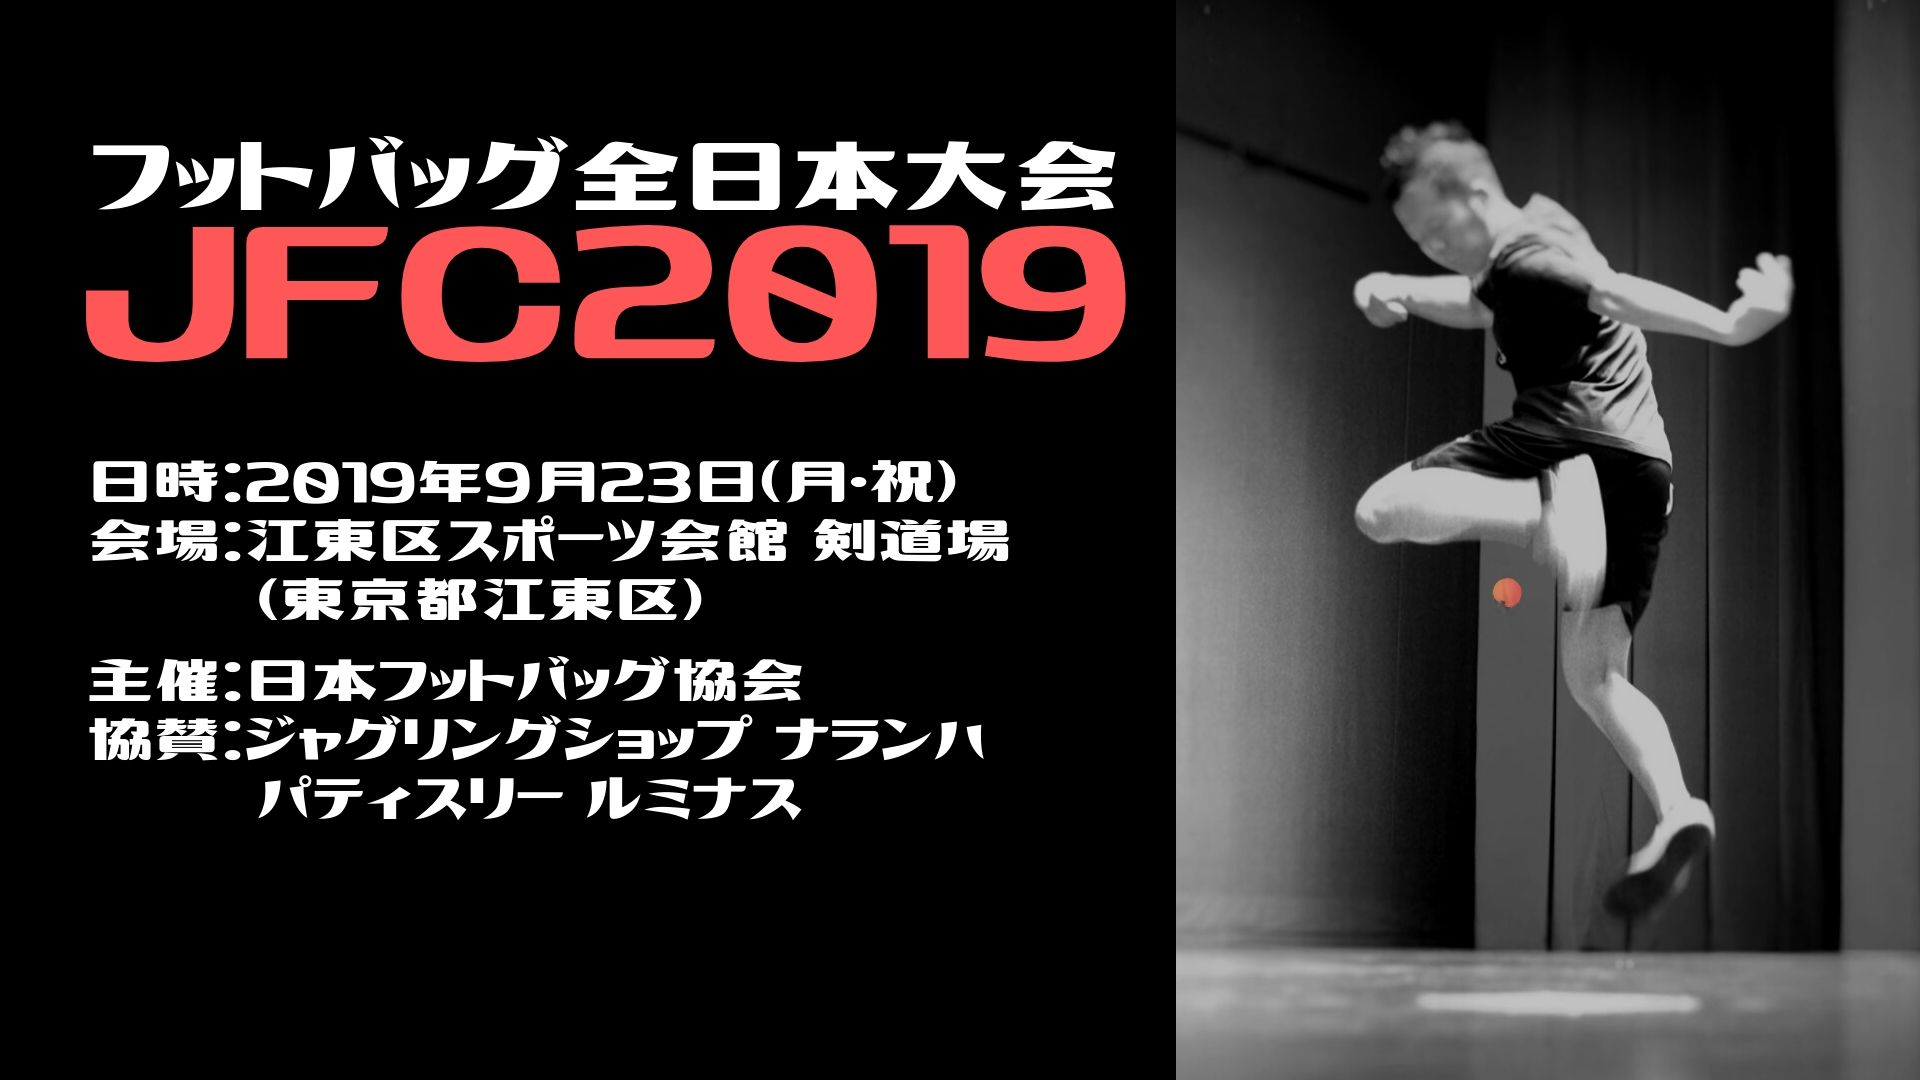 Japan Footbag Championships 2019 on Sep. 23(Open 9:00am)